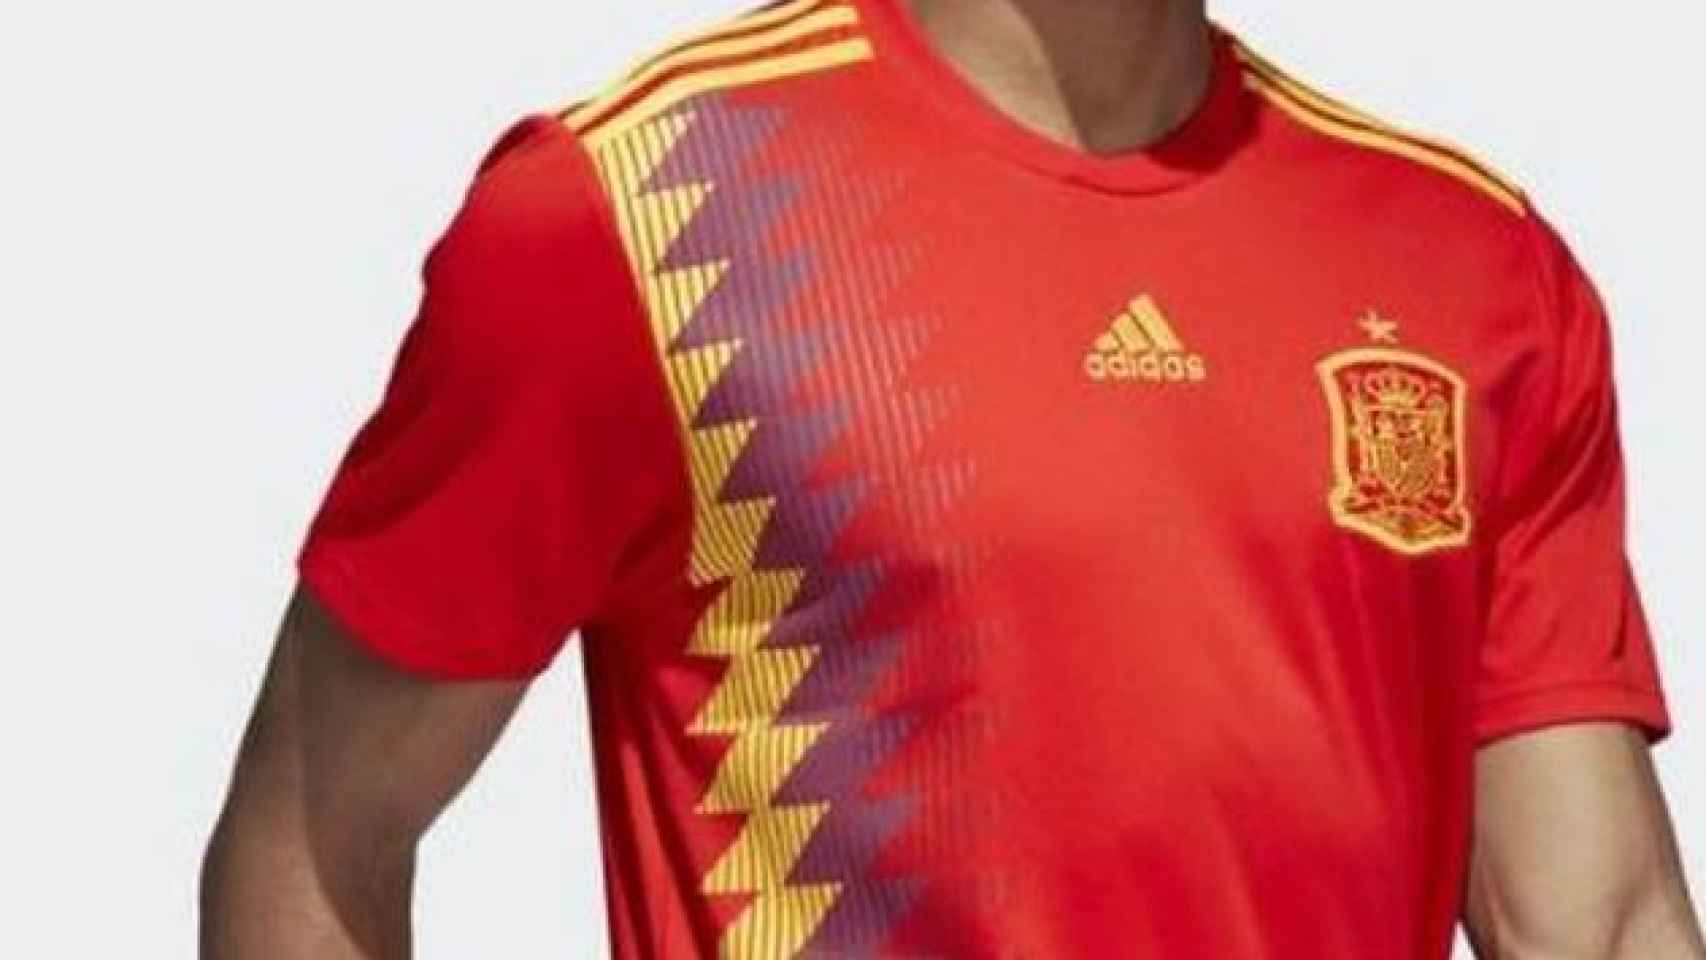 camiseta oficial seleccion española